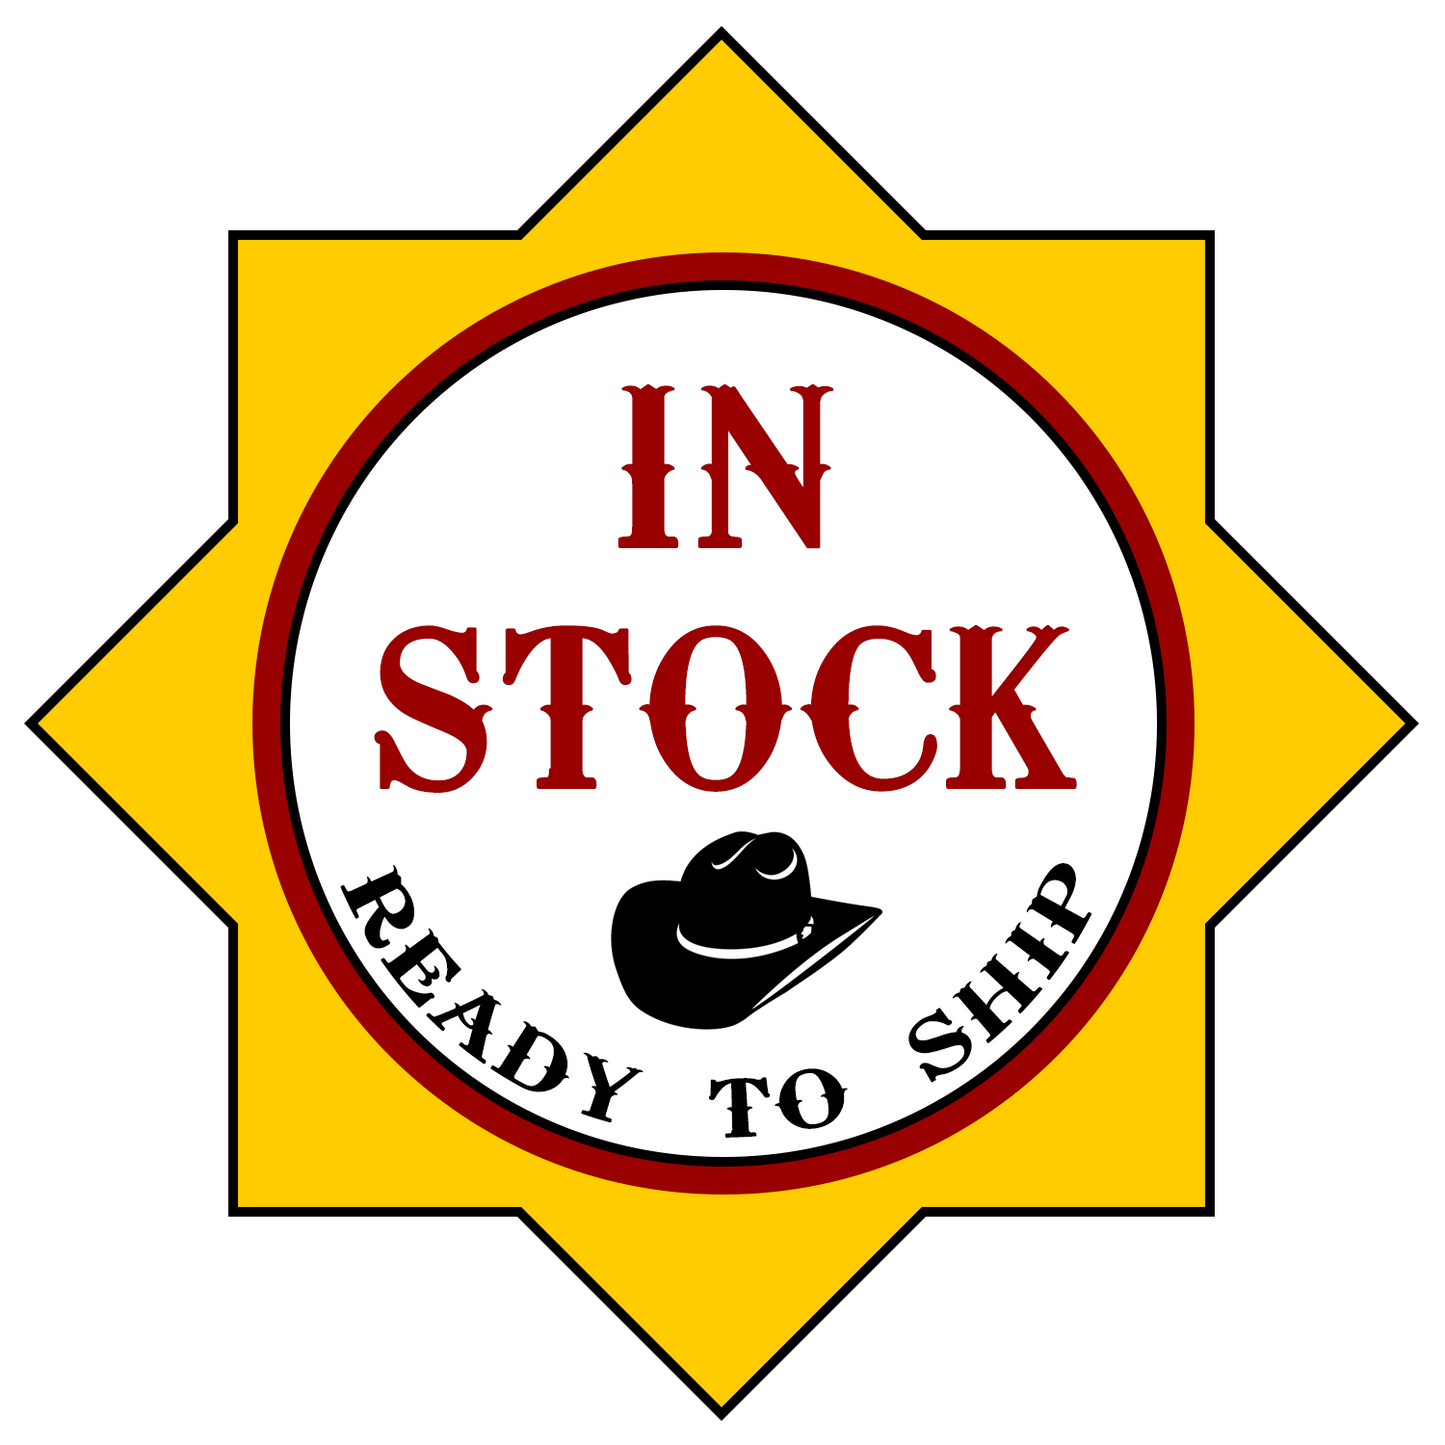 Twinstone Cowboy Hat 10X Cattleman Black B-4" Texas